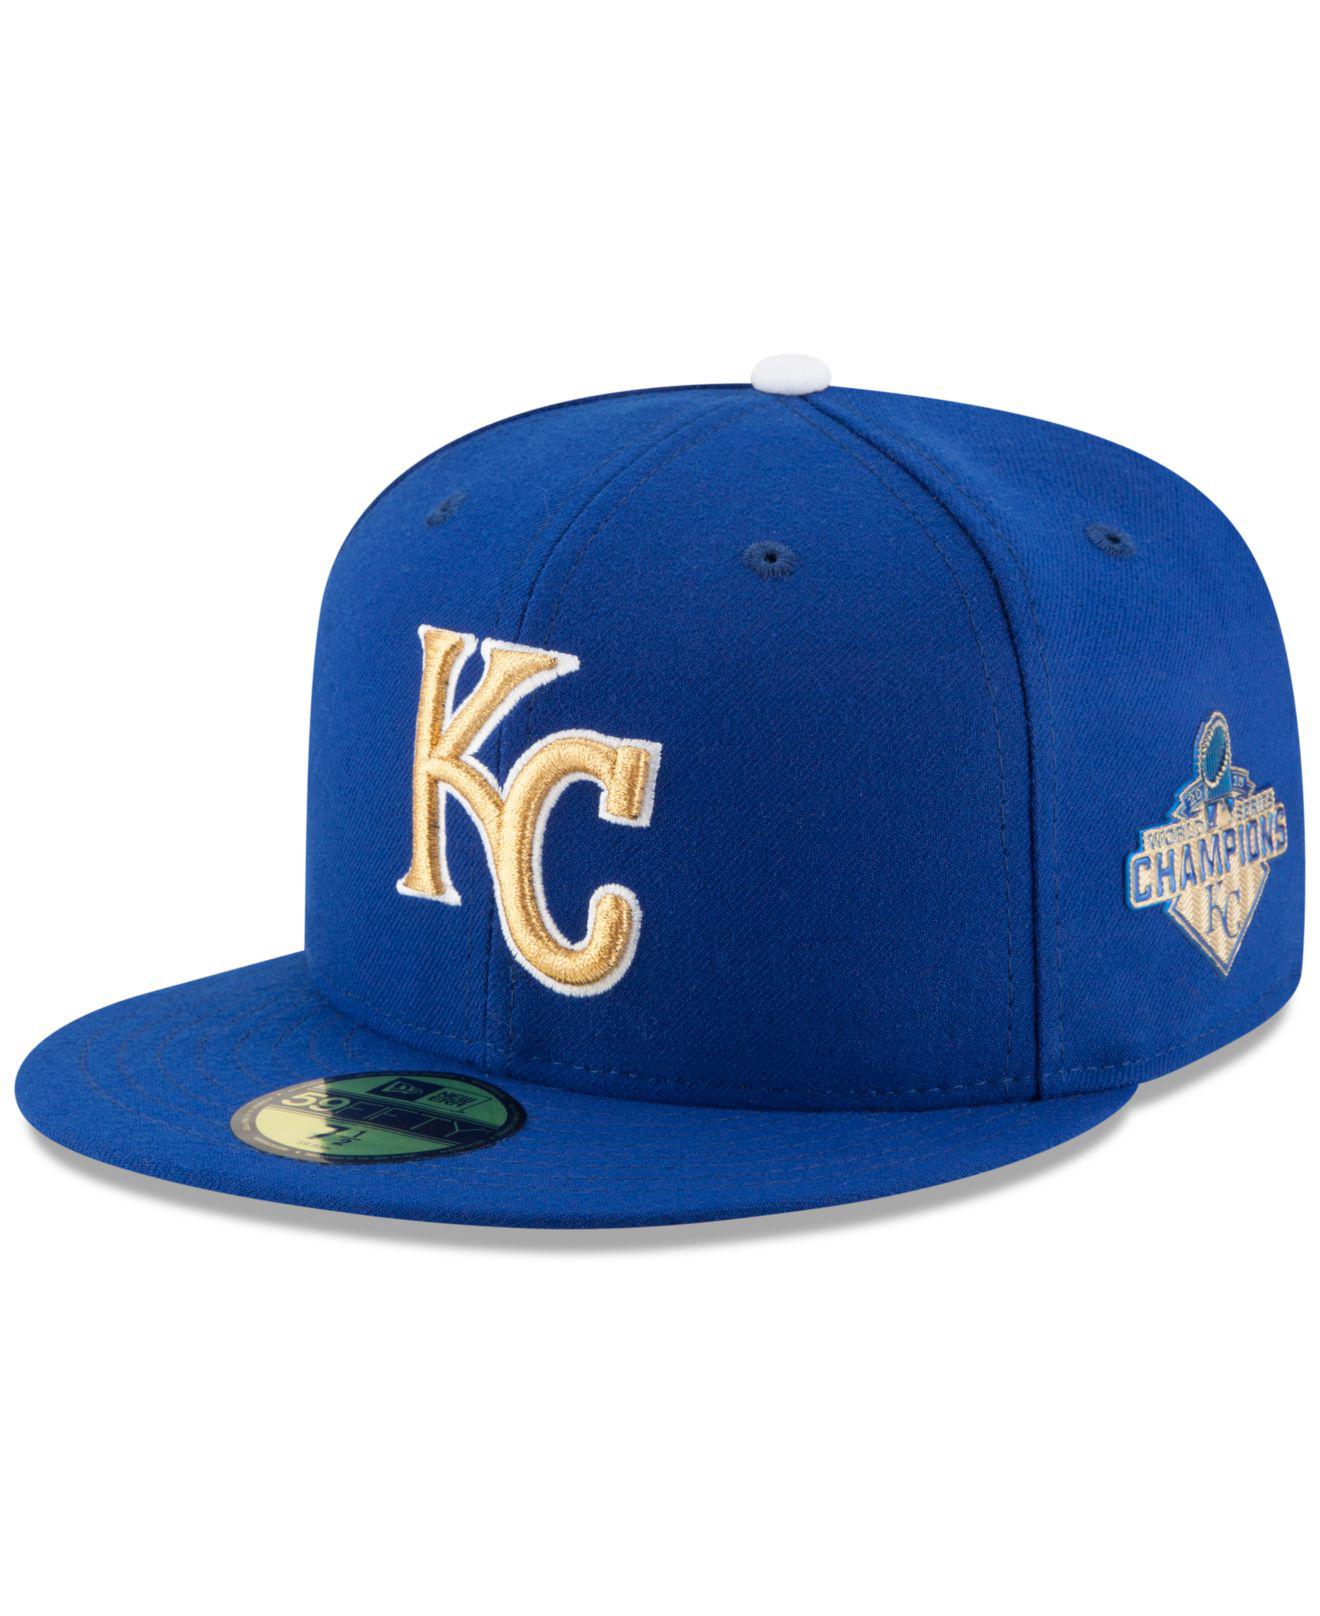 Kansas City Royals 2015 World Series Champs Royal Blue NEW Adjustable Hat 